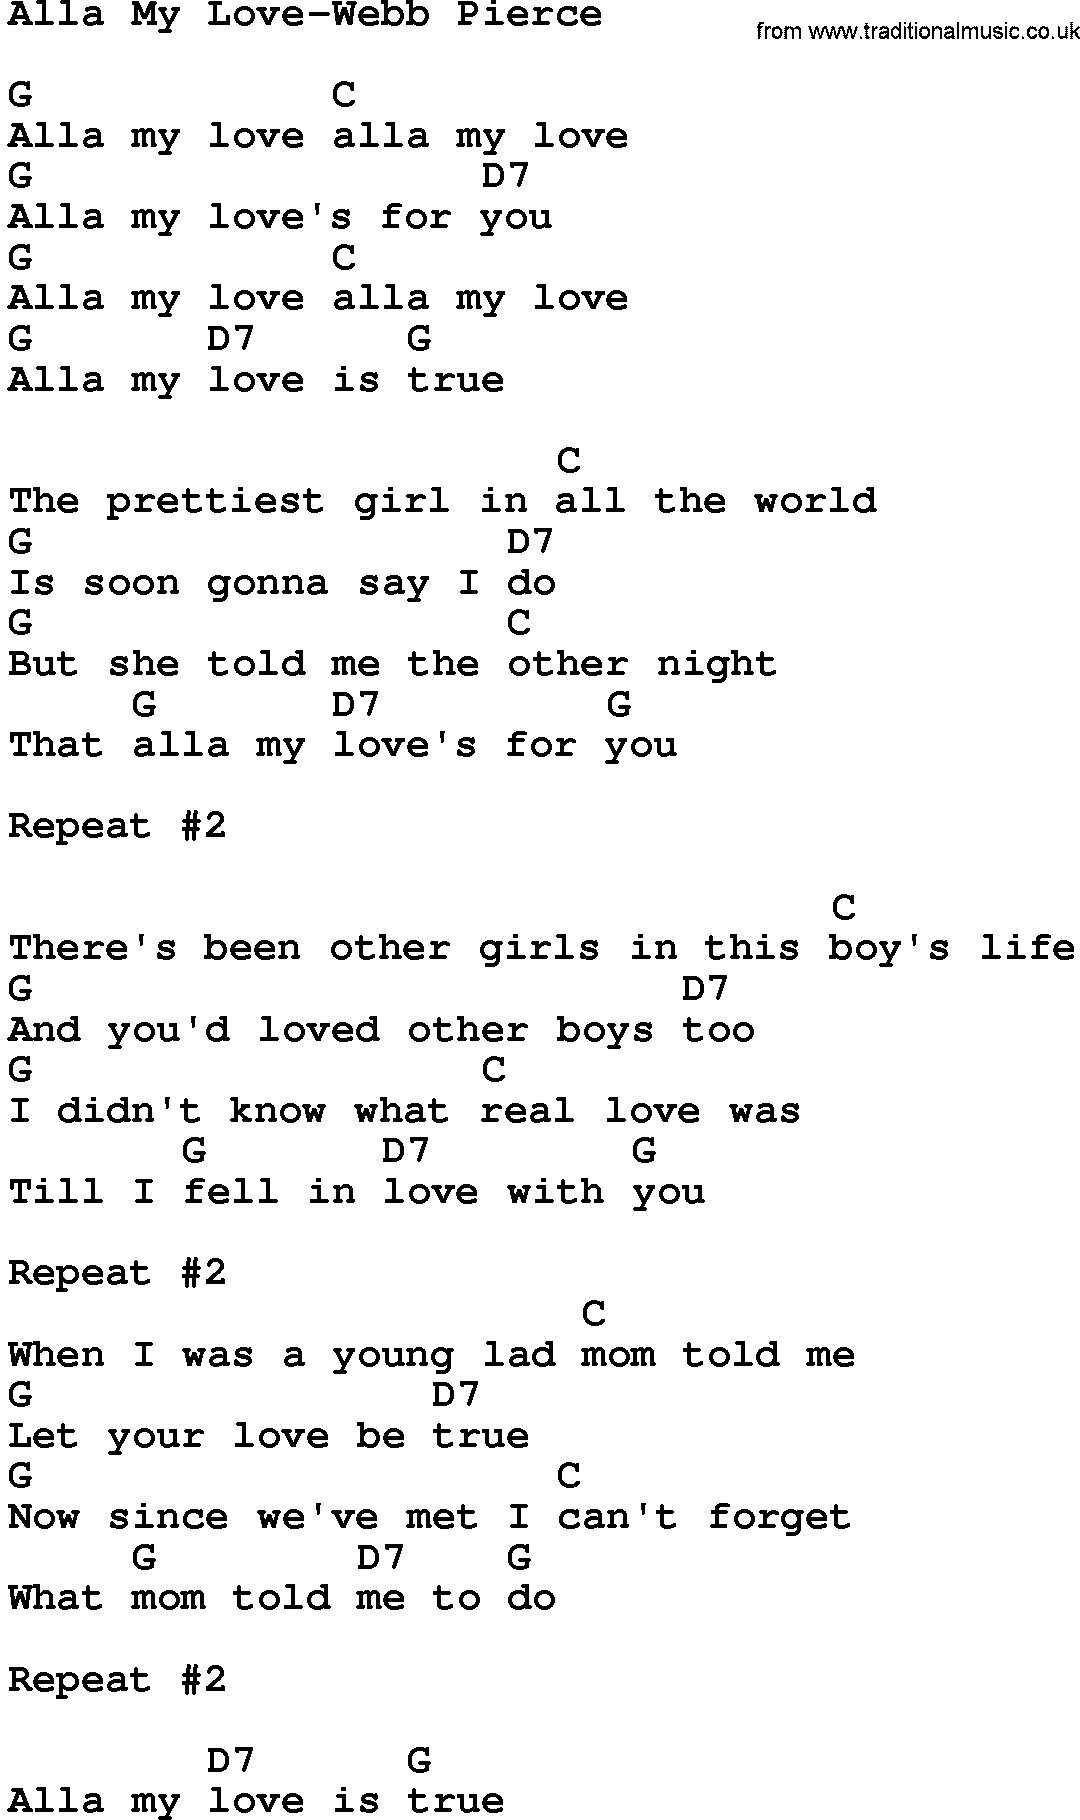 Country music song: Alla My Love-Webb Pierce lyrics and chords